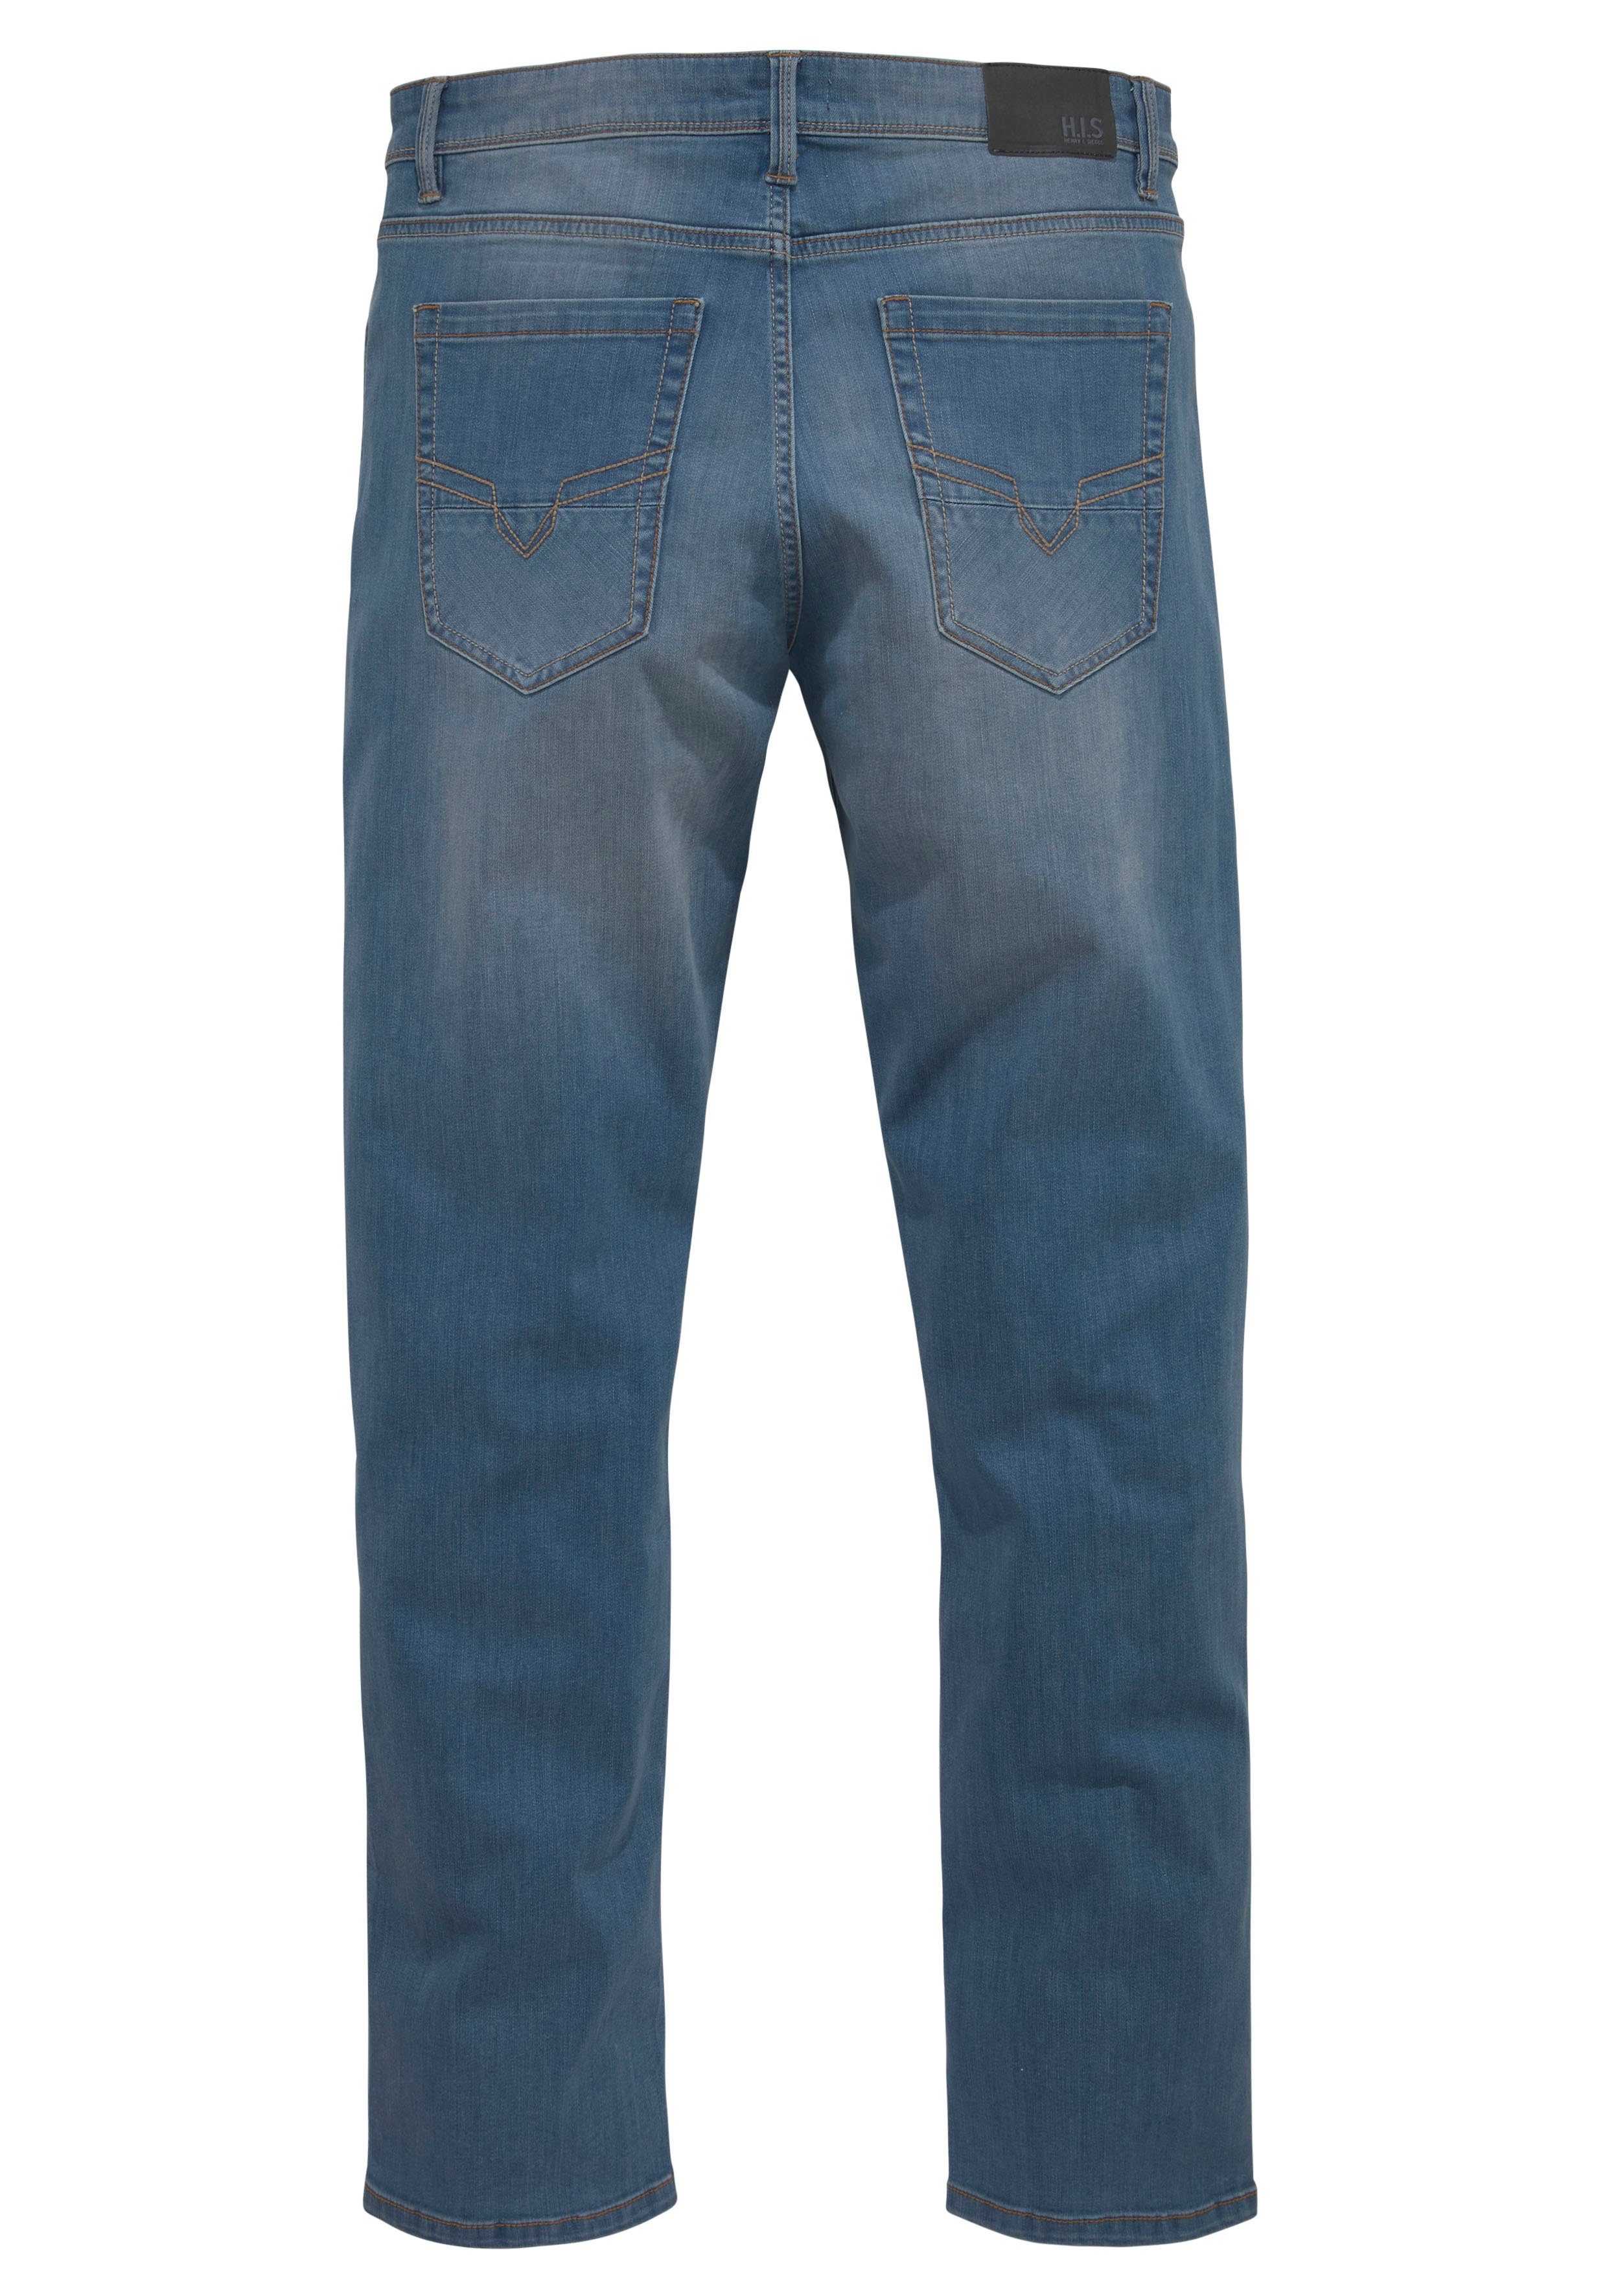 H.I.S Comfort-fit-Jeans ANTIN Ökologische, Wash durch Produktion wassersparende blue-used Ozon